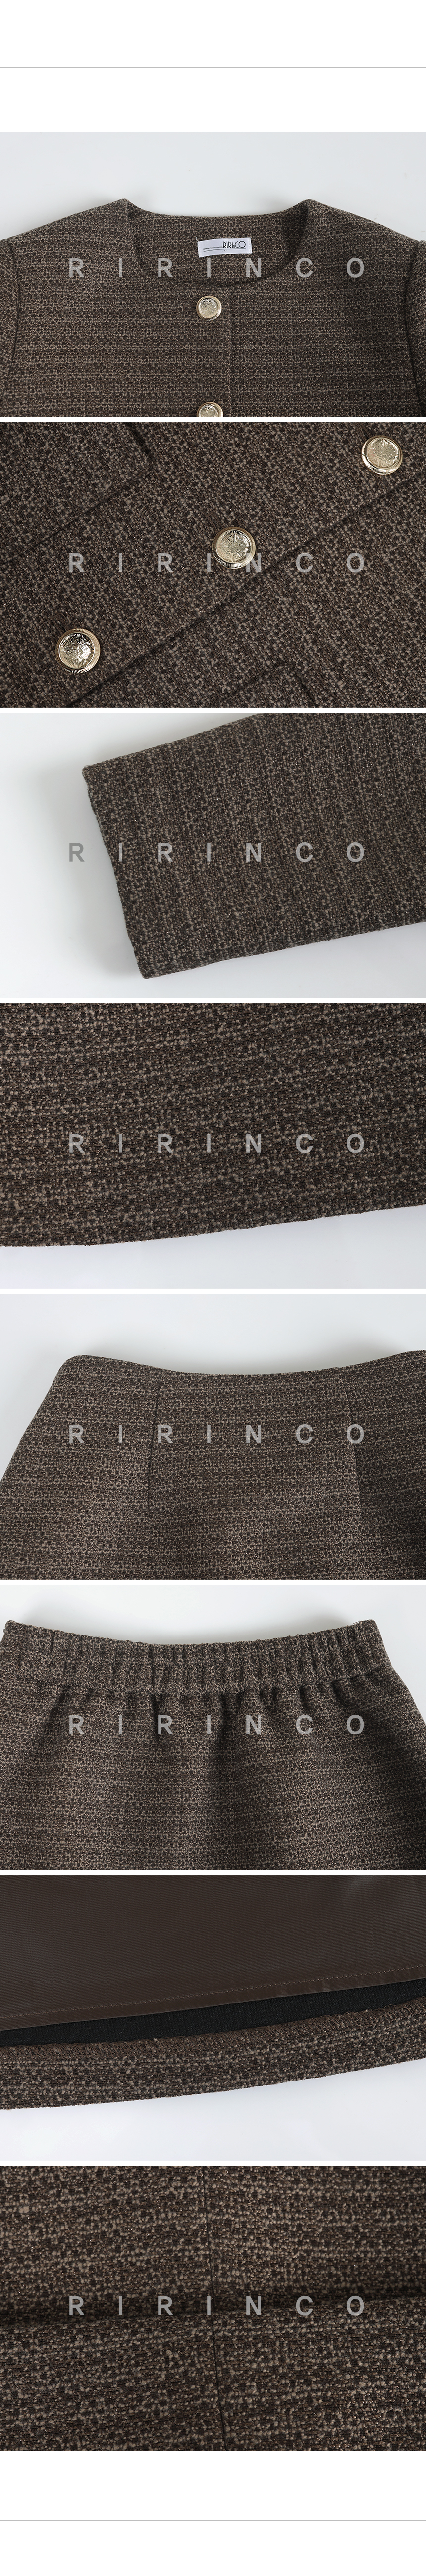 RIRINCO ツイードジャケット&後ろゴムミニスカート上下セット